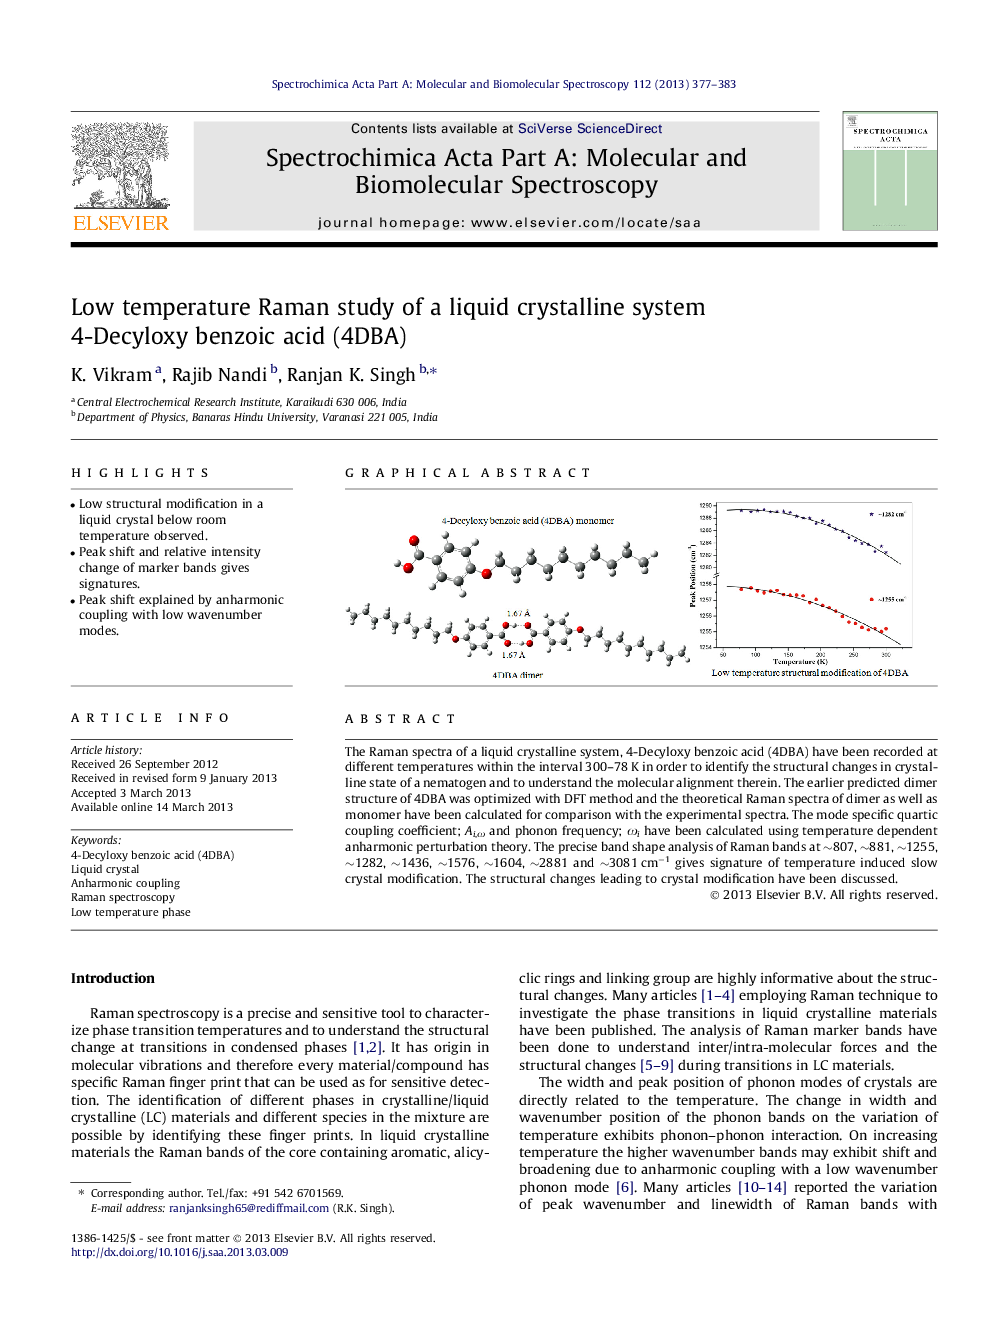 Low temperature Raman study of a liquid crystalline system 4-Decyloxy benzoic acid (4DBA)